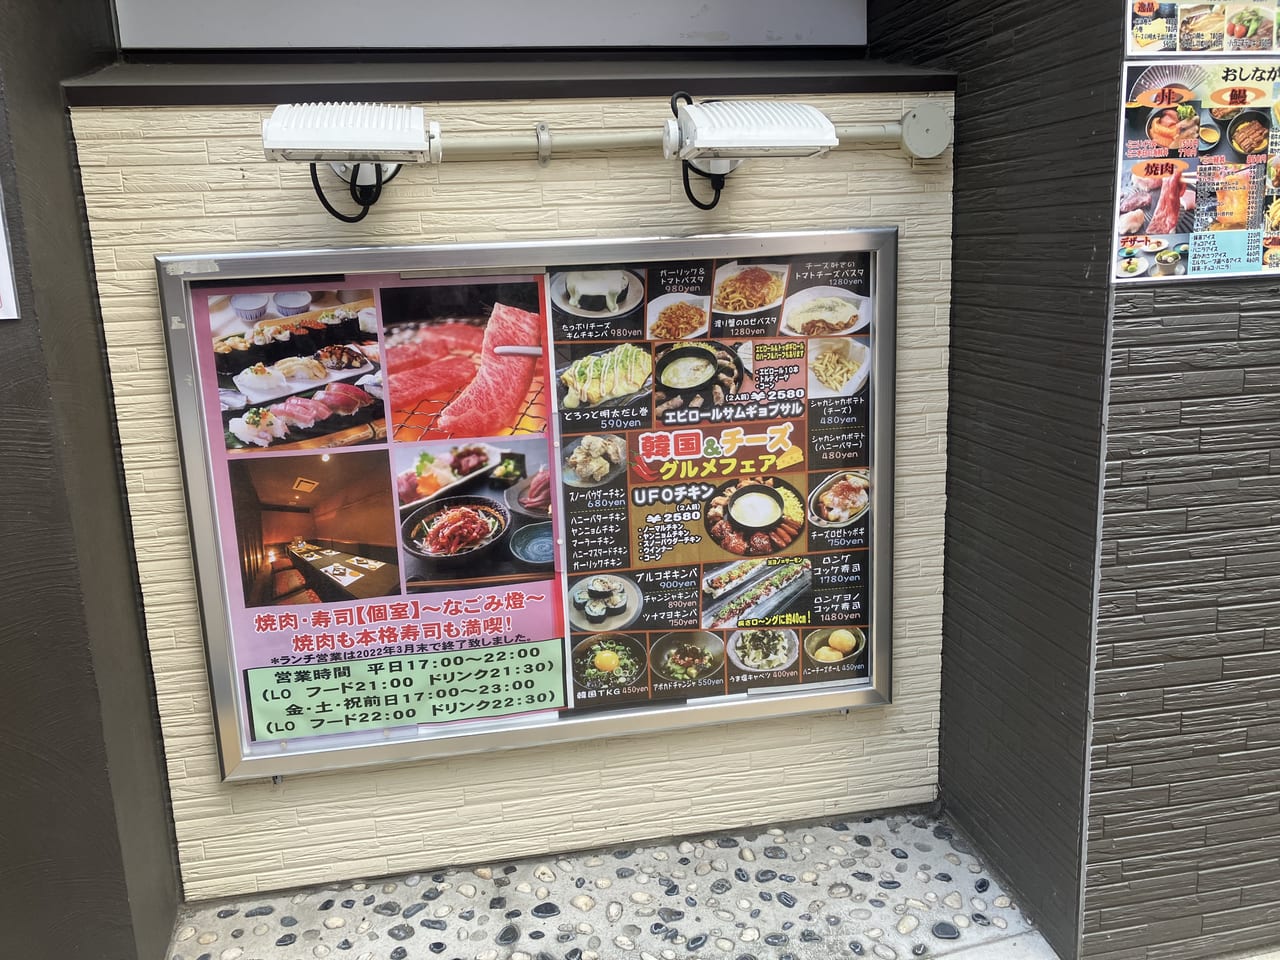 nagomi menu